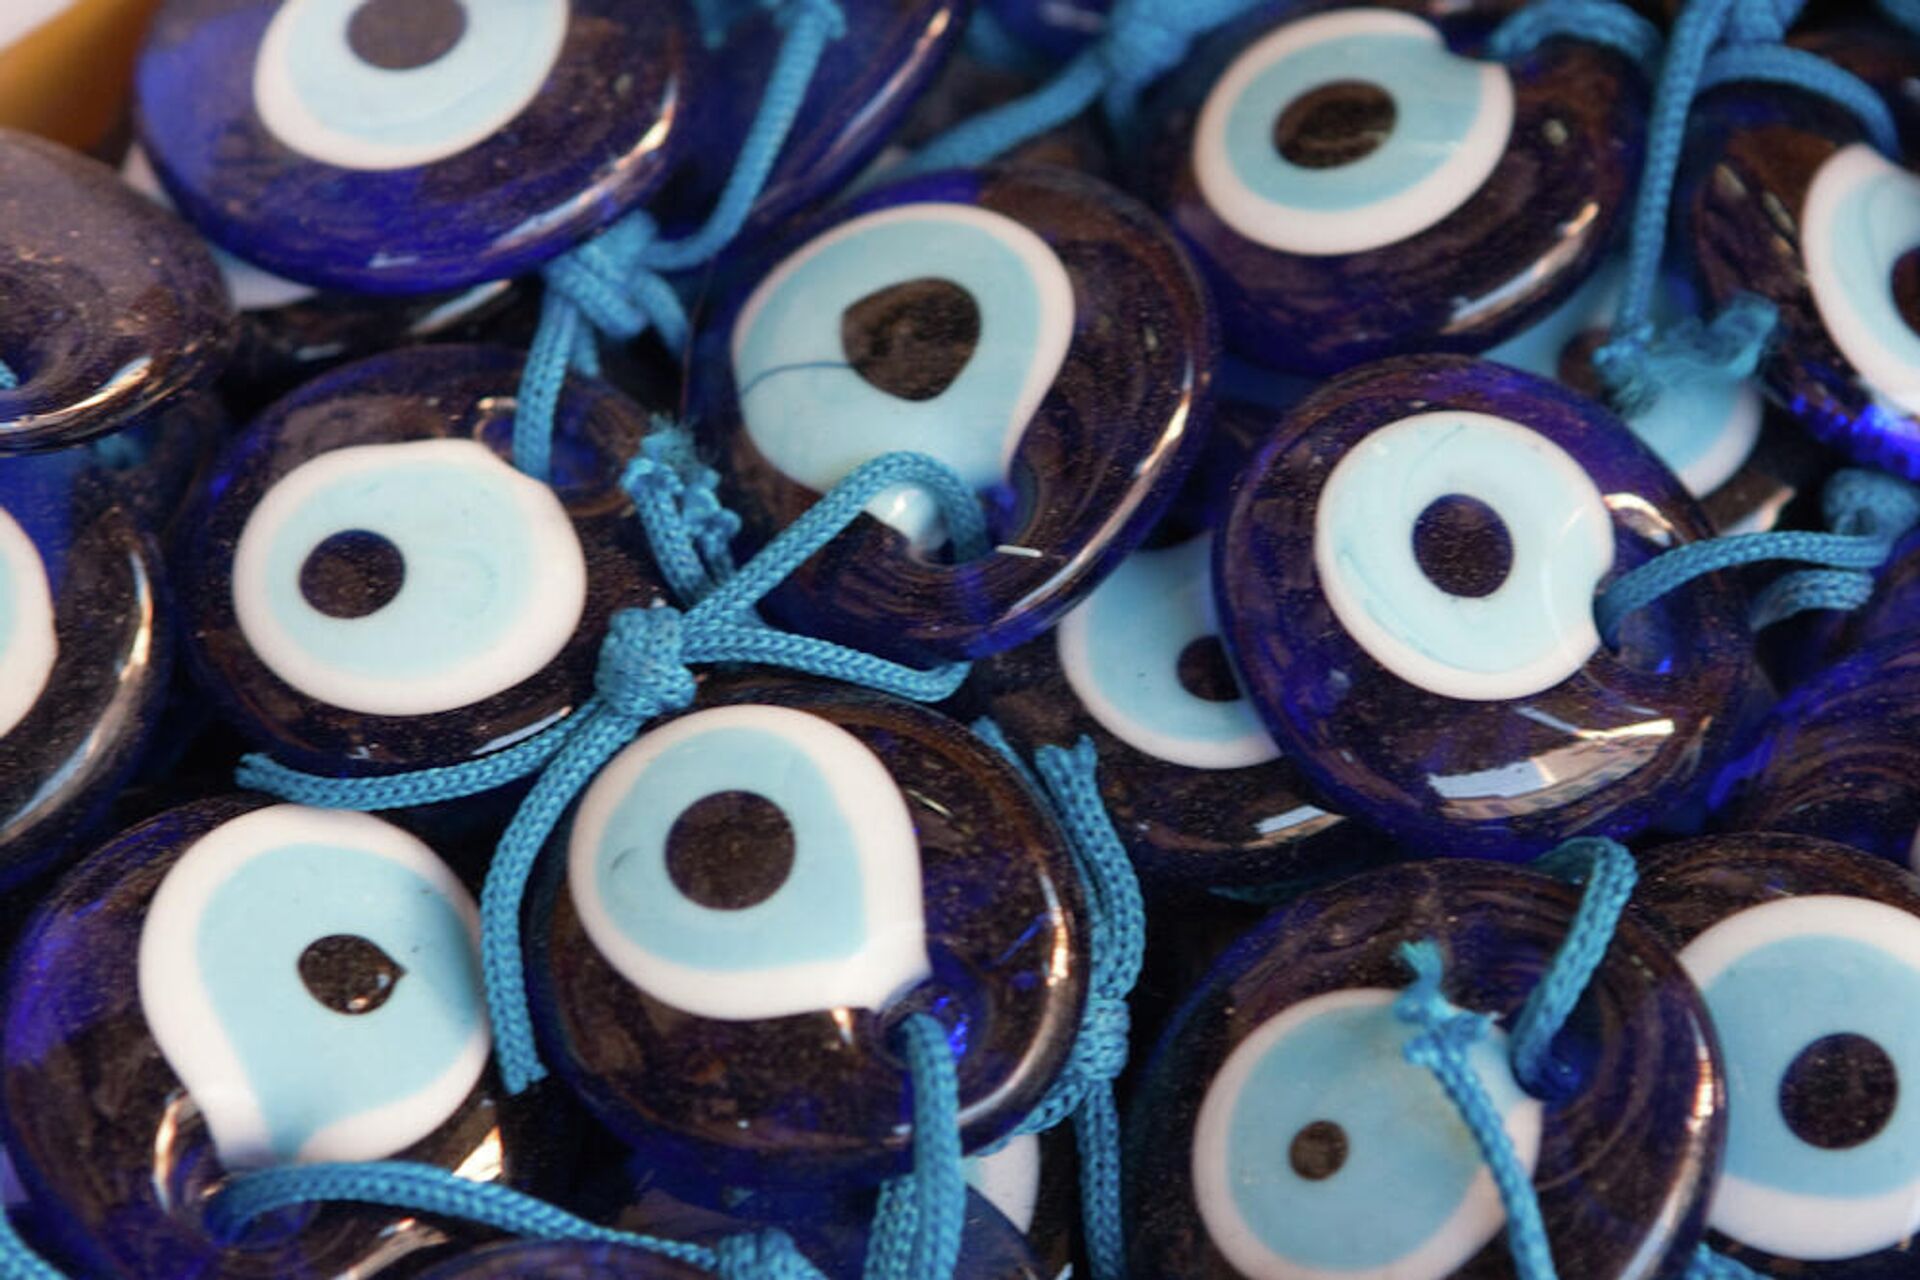 Un ojo hecho de cristal azul, amulet que protege del mal de ojo - Sputnik Mundo, 1920, 26.05.2021